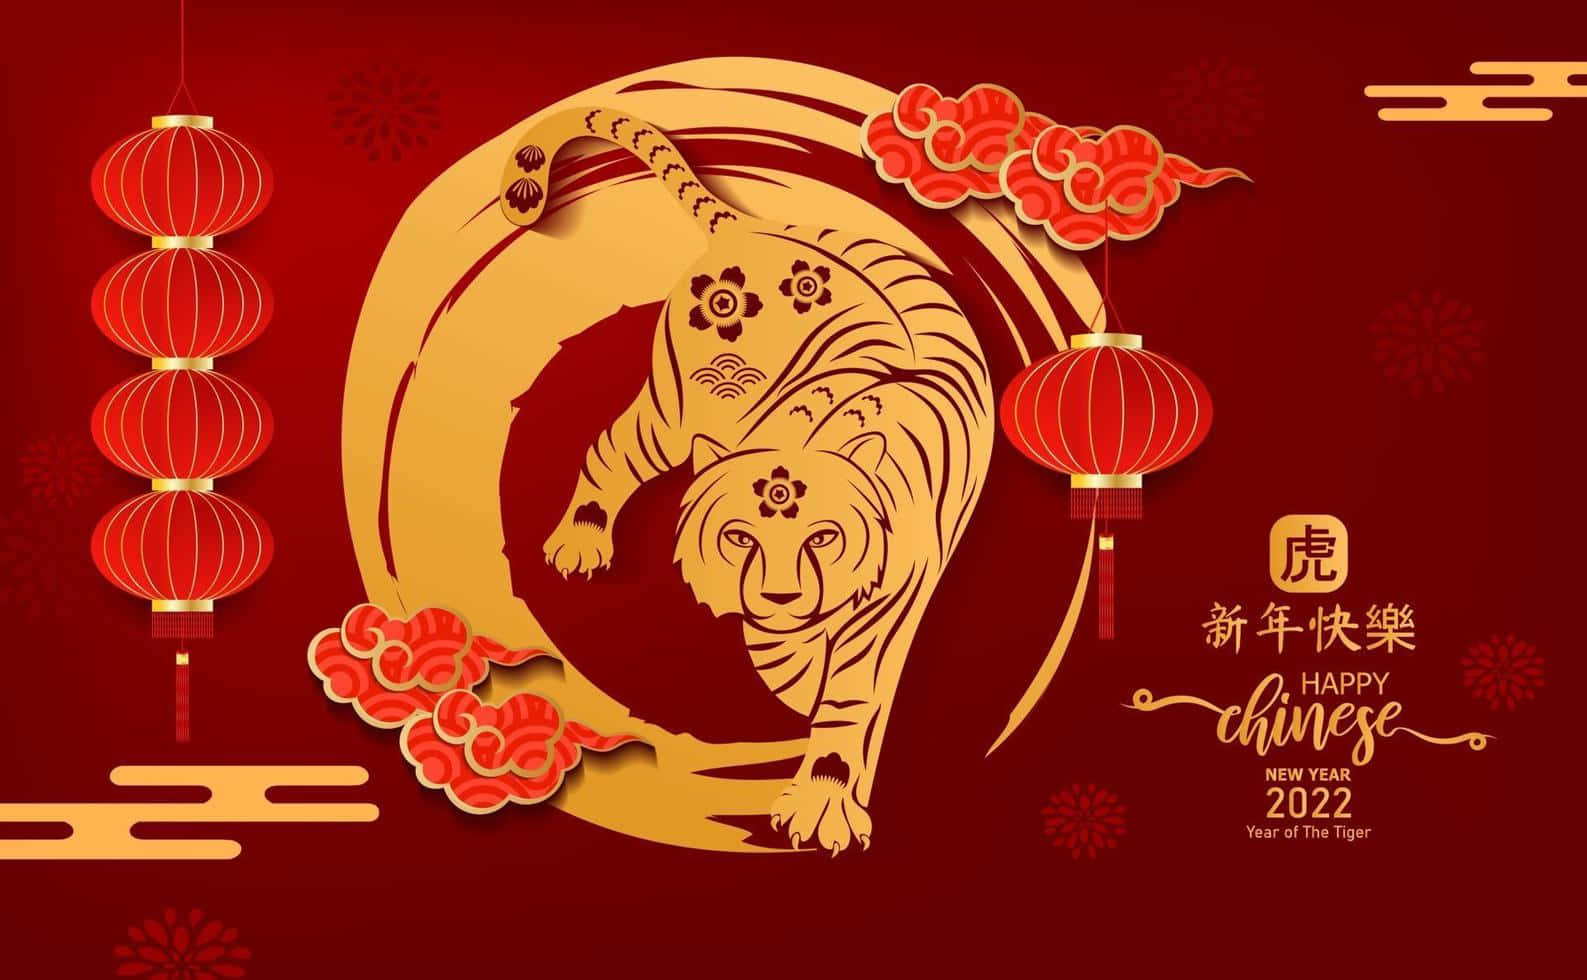 Celebrate a joyous Chinese New Year 2022!